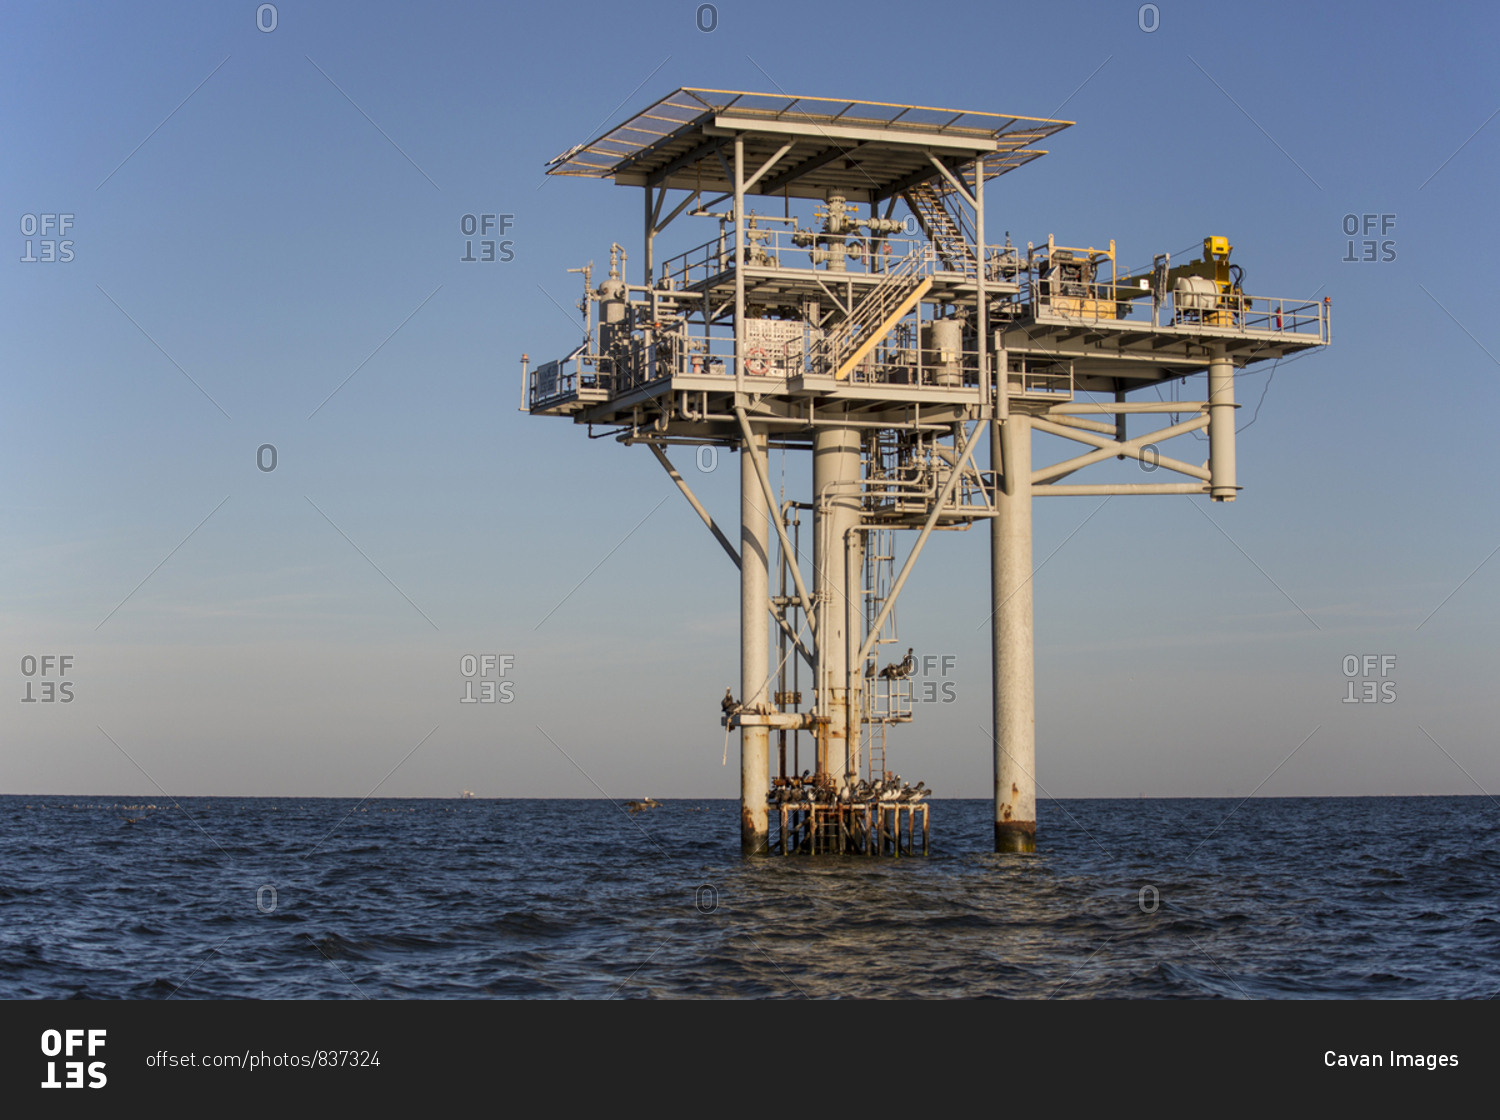 Oil platform against clear sky at dawn, Lake Charles, Louisiana, USA